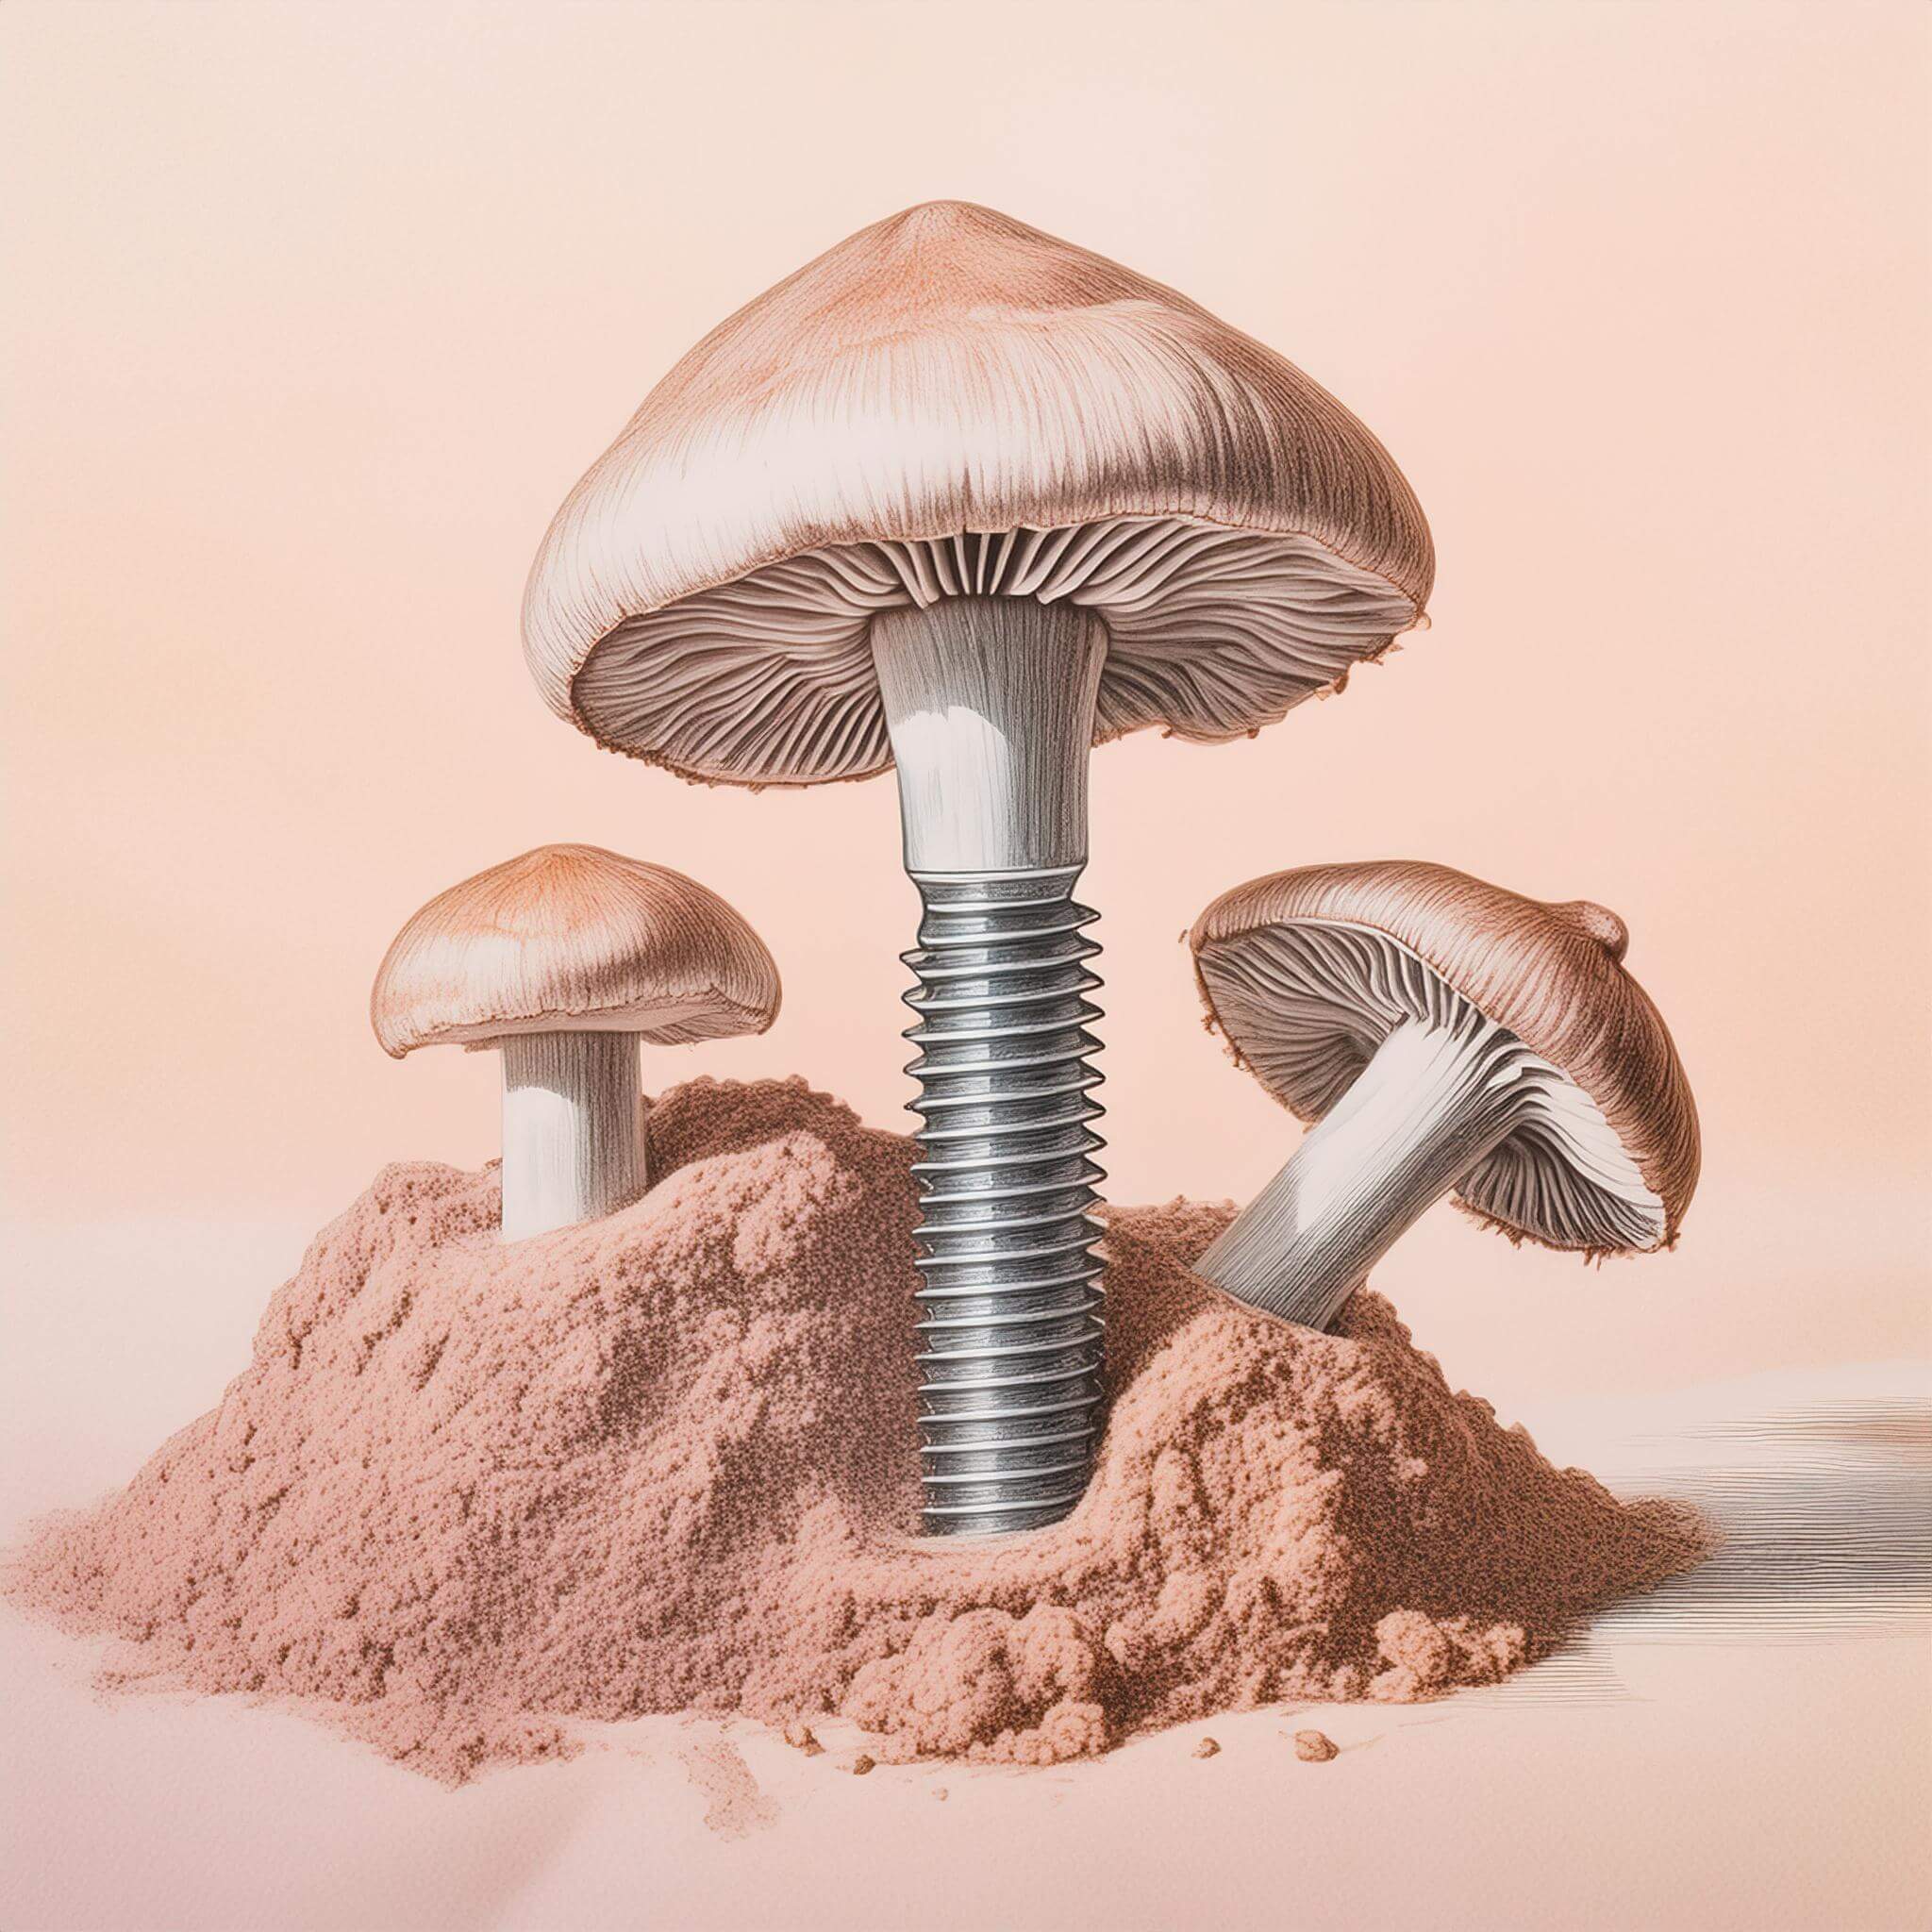 drawing of mushrooms and mushroom powder illustrating mushrooms for joints